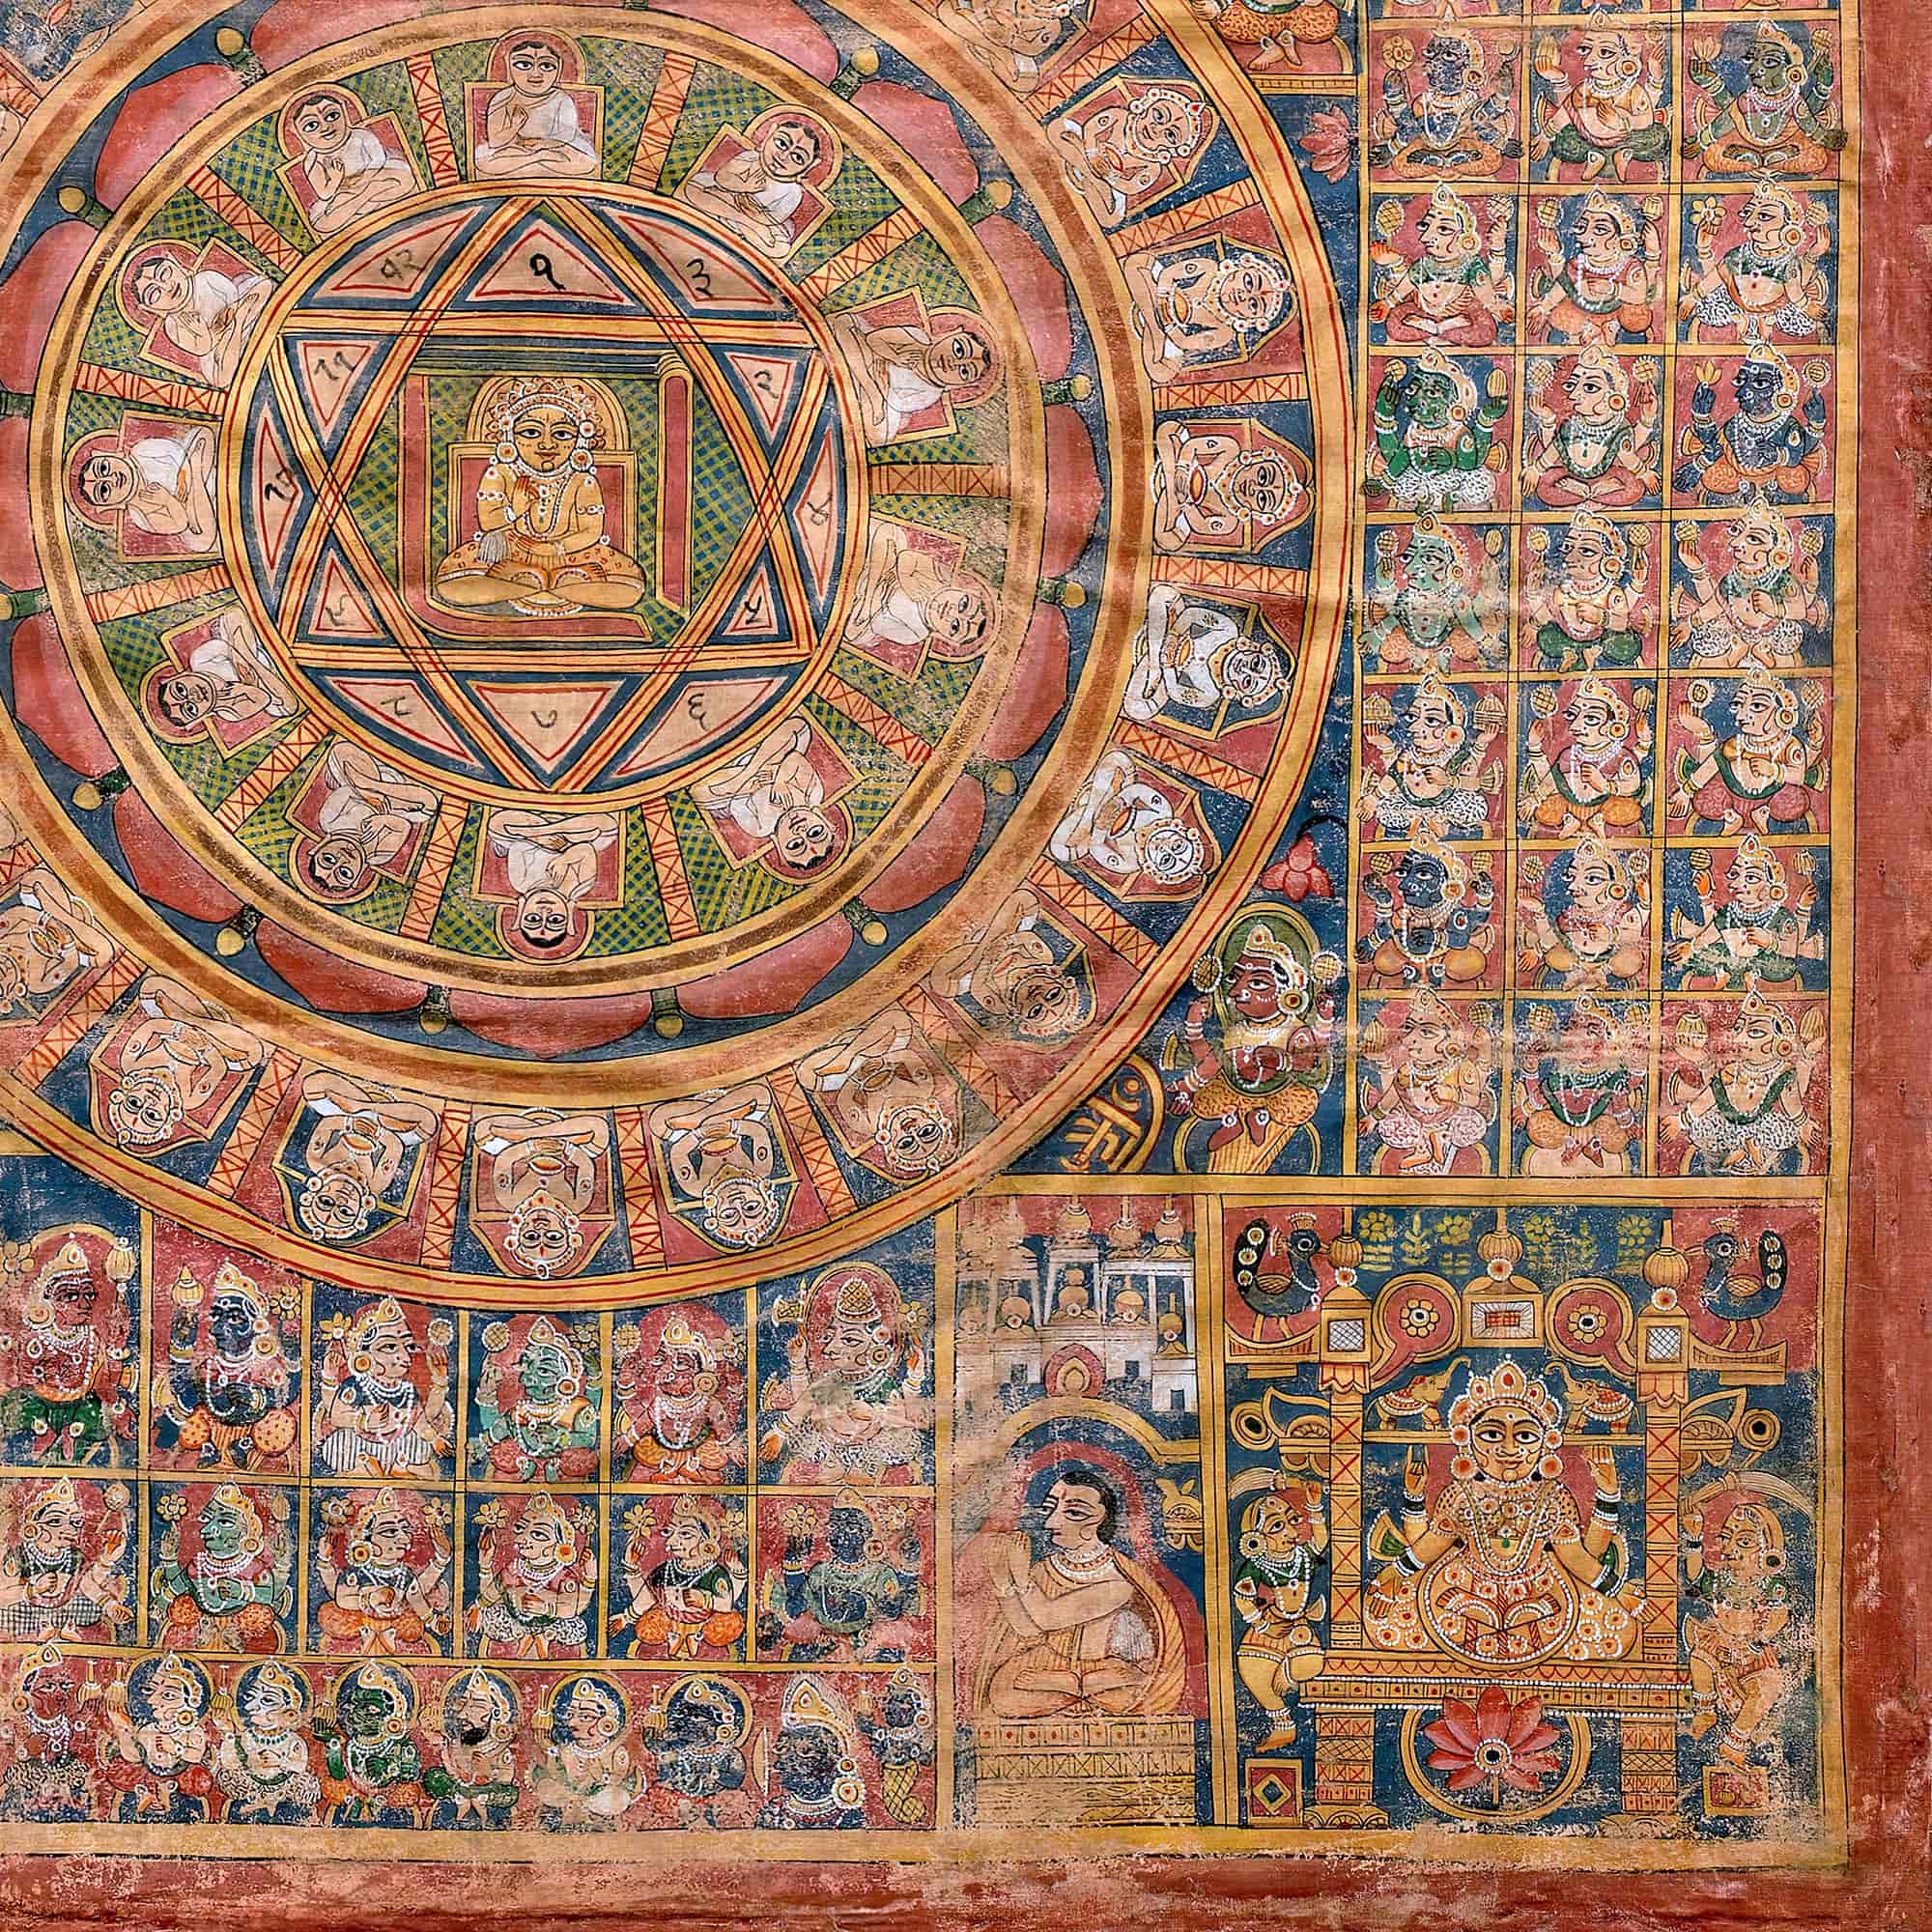 Jain Tantric Diagram | Indian Mandala, Yantra | Hippie Sacred Geometry, Yoga Spiritual Art, Numerology Framed Art Print - Sacred Surreal